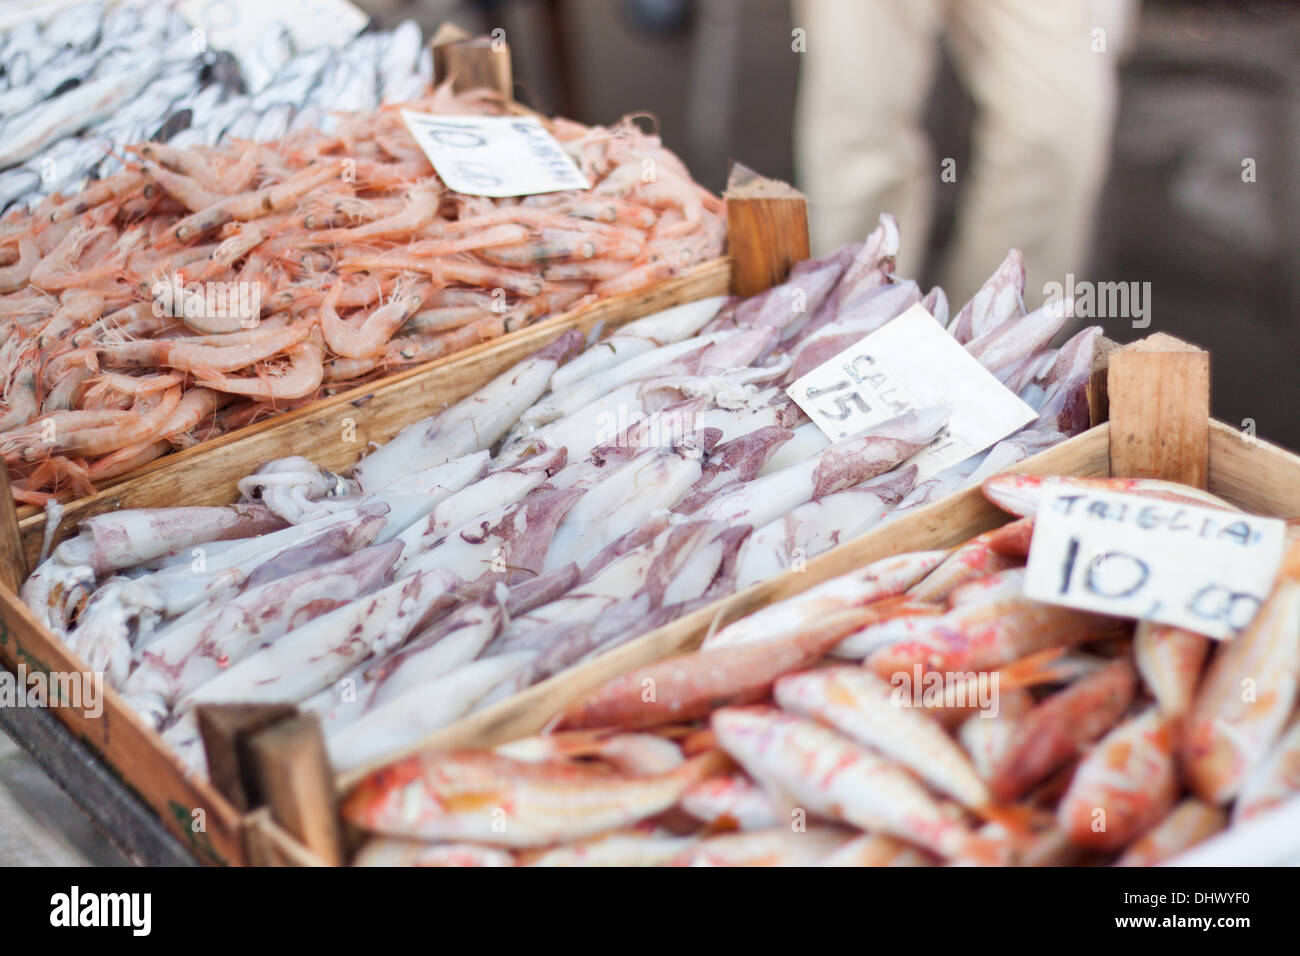 fresh fish box container market 'mullet fish' seafood calamari shrimps Stock Photo